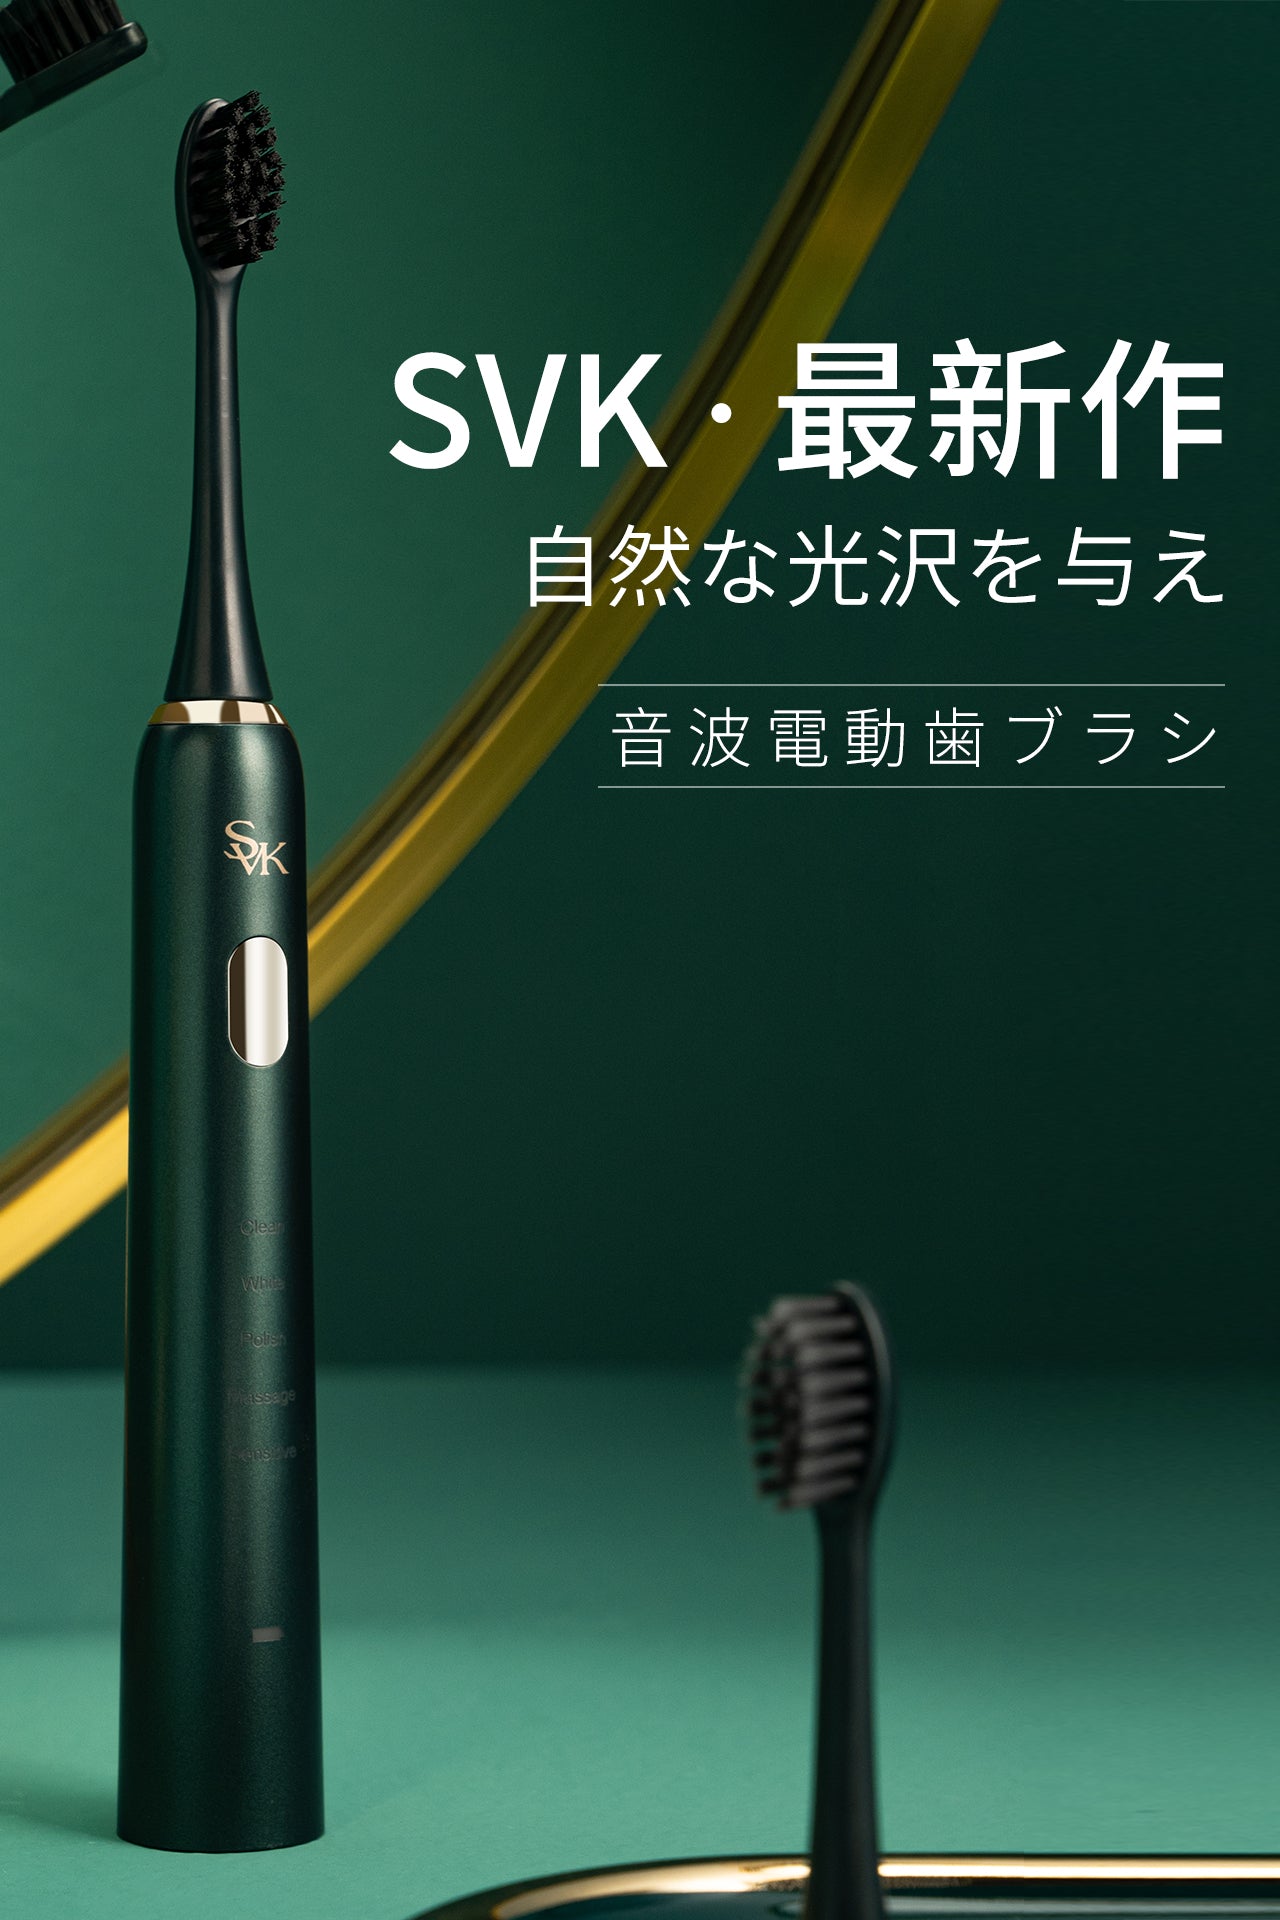 SVK 電動歯ブラシ 高速音波振動 磁気浮上式モーター – beyourlovercomjp